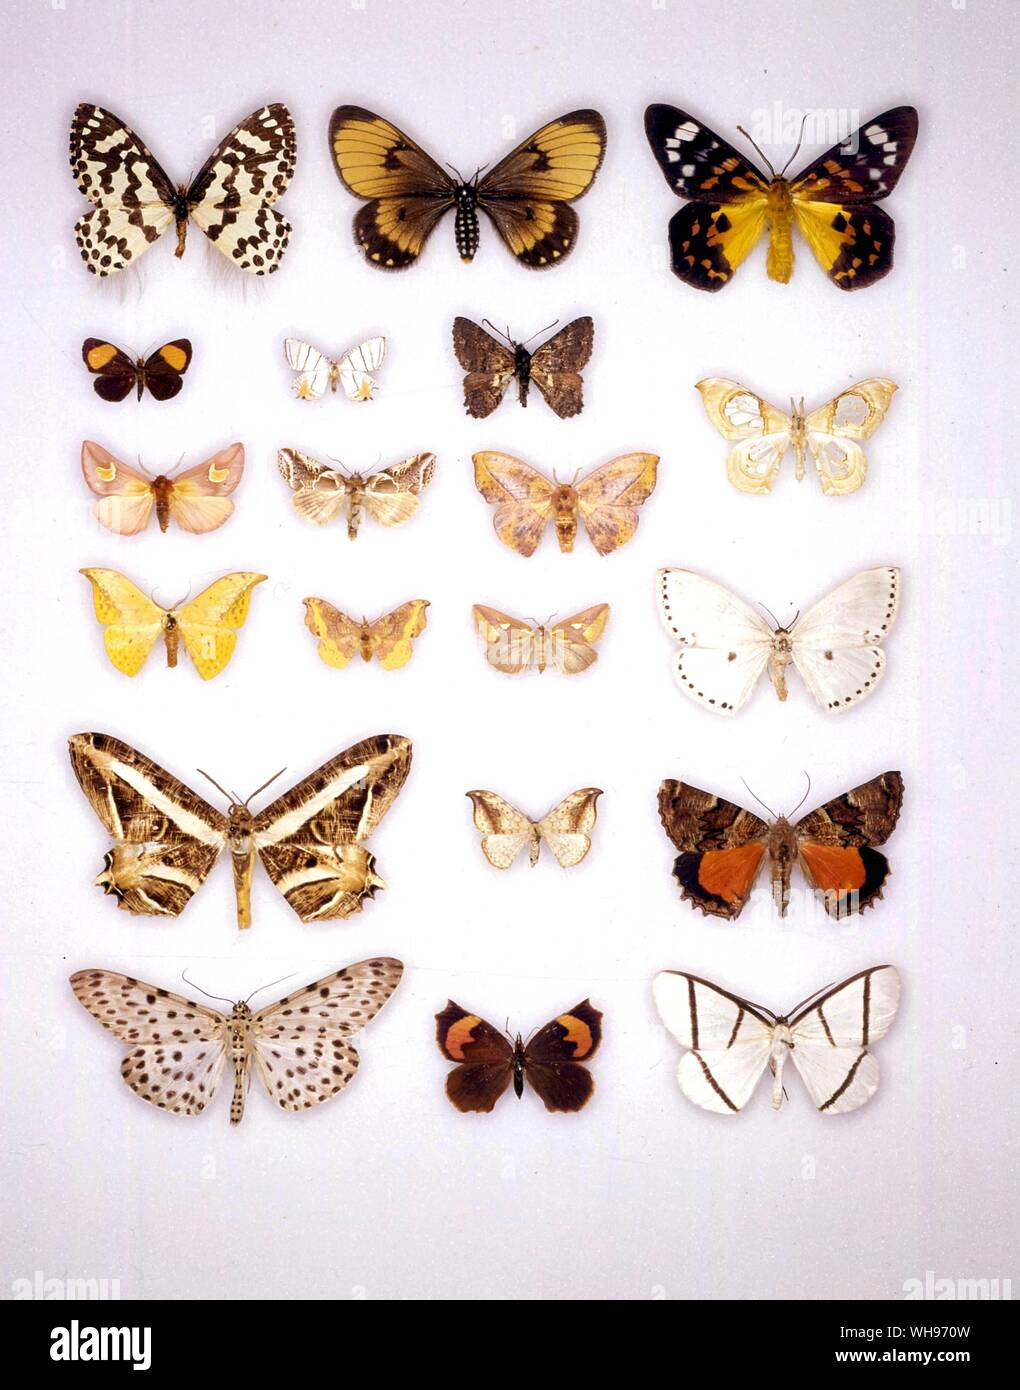 Butterflies/moths - (left to right) Pterothysanus noblei, Hibrildes norax, Dysphania cuprina - (second row left to right) Callidula lunigera, Epiplema himala, Apoprogenes hesperistis - (third row left to right) Epicmelia theresiae, abrosyne scripta, Oreta singapura - (pale beige one in middle right of rows two and three) Macrauzata maxima - (fourth row left to right) Tridrepana flava, Oreta rosea, Axia margarita, Cyclidia dictyaria - (fifth row left to right) Erebomorpha fulguritia, Drepana falcataria, Catacalopsis medinae - (sixth row) Percnia felinaria, Pterodecta felderi, Carpella districta Stock Photo